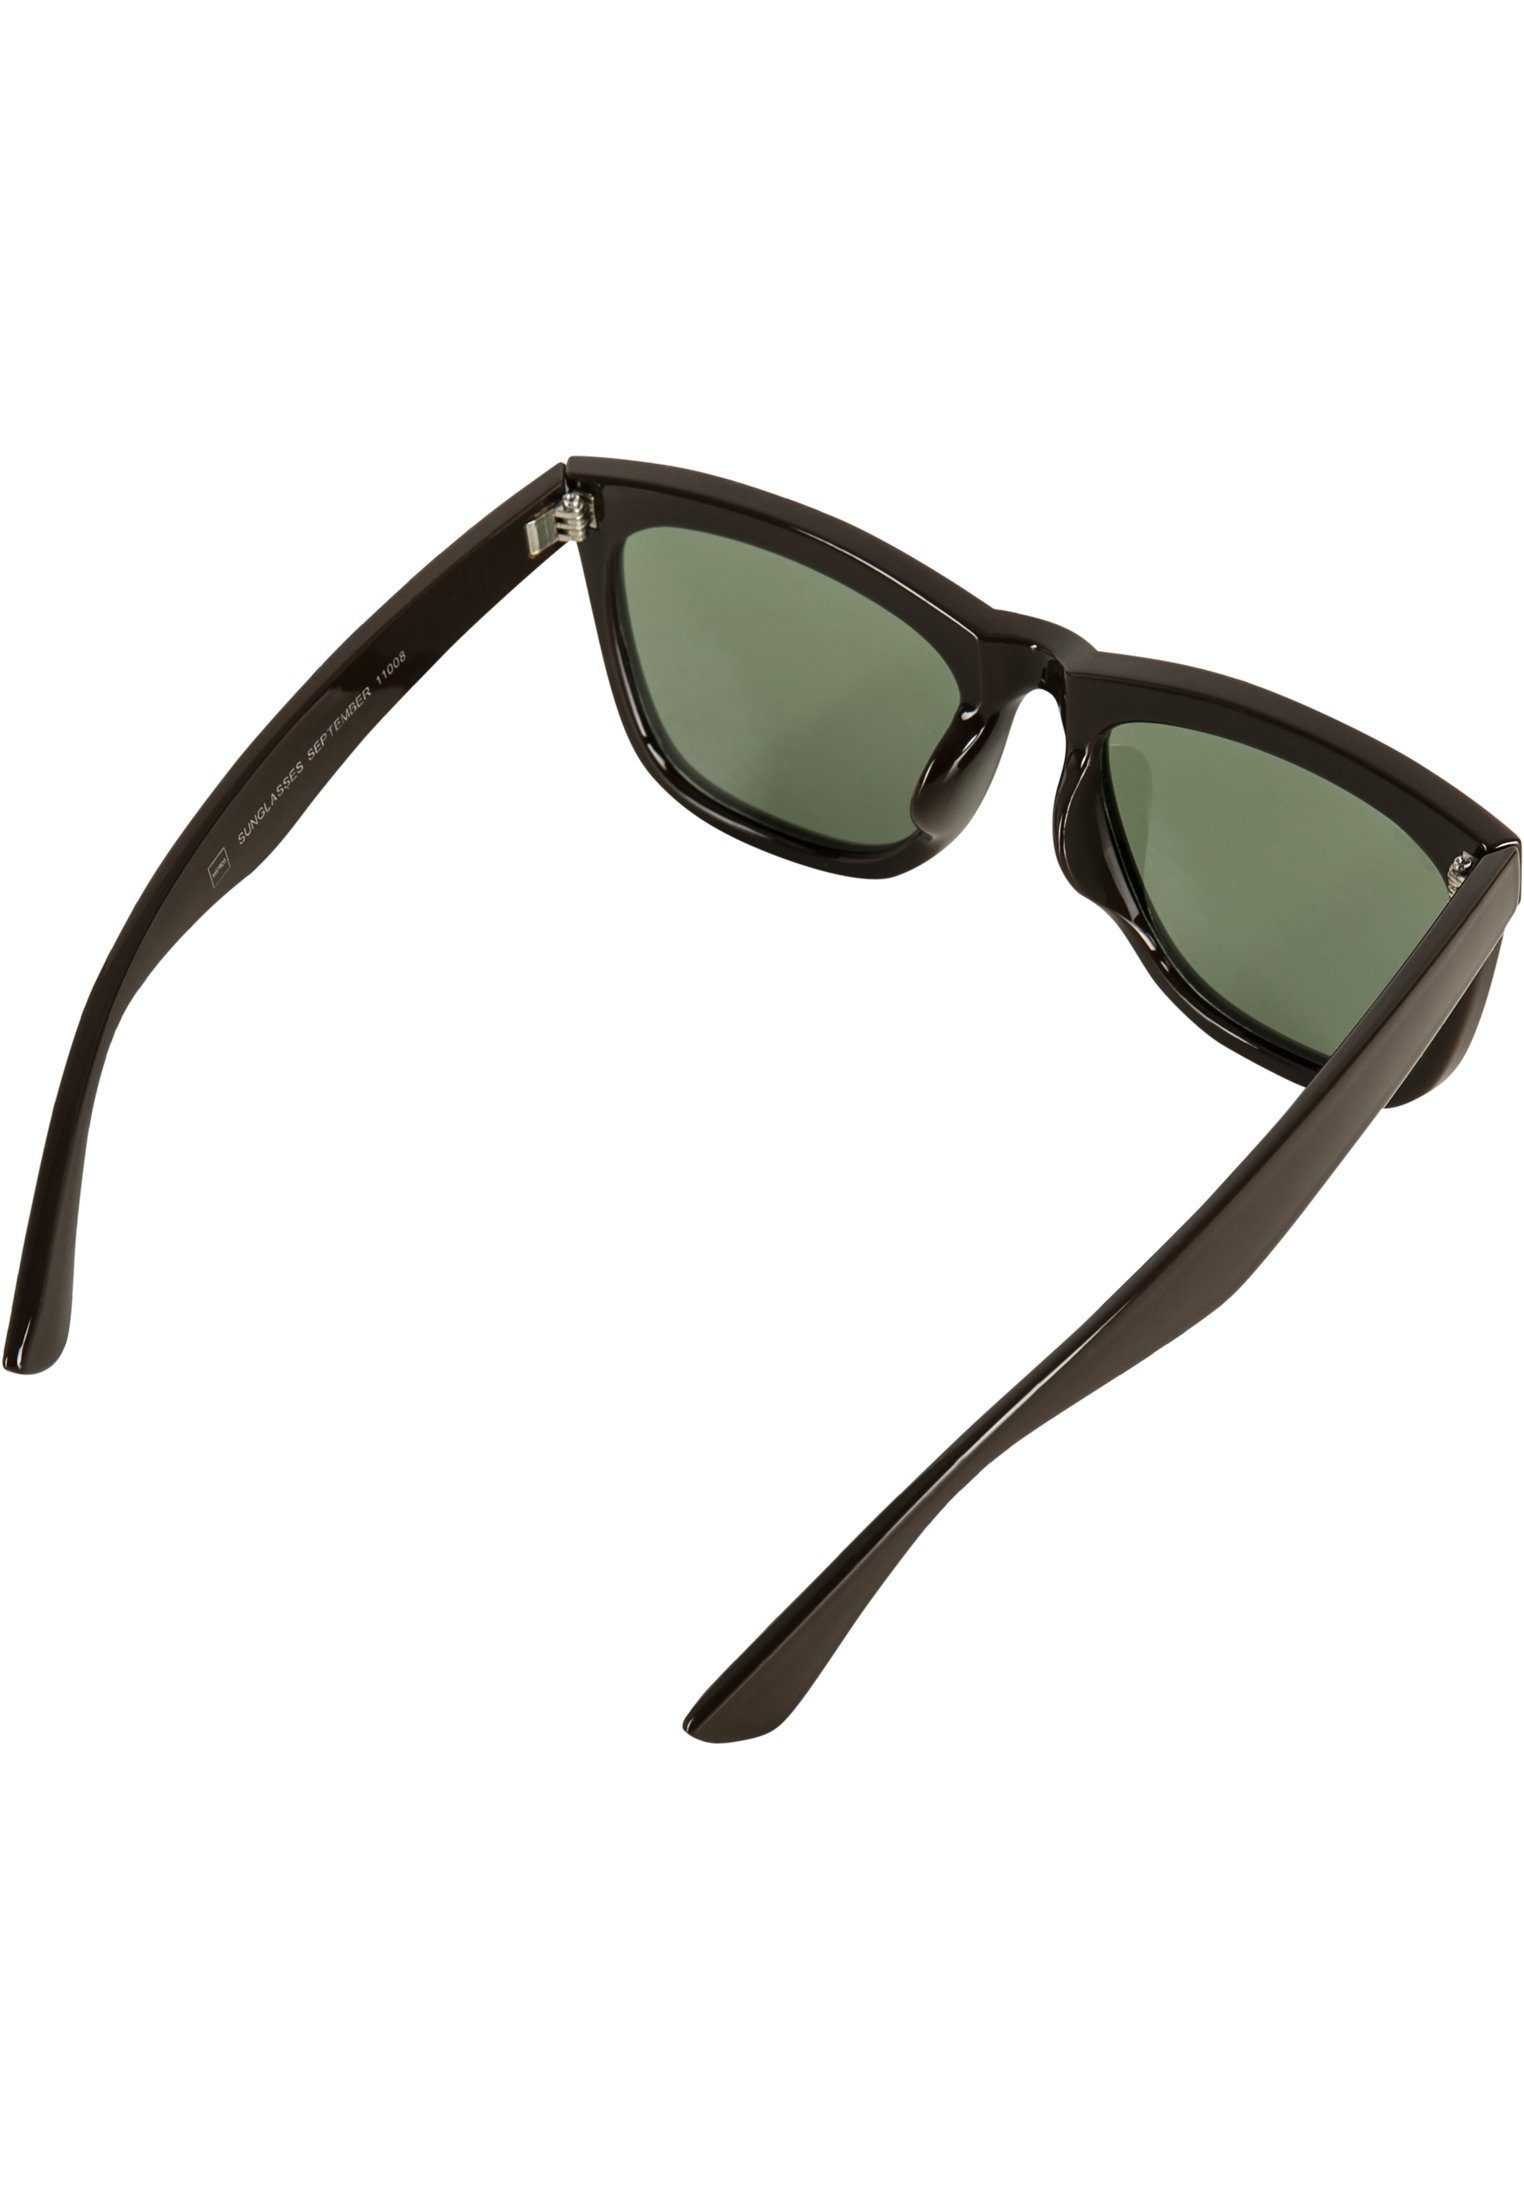 MSTRDS Sonnenbrille Accessoires Sunglasses September brown/green